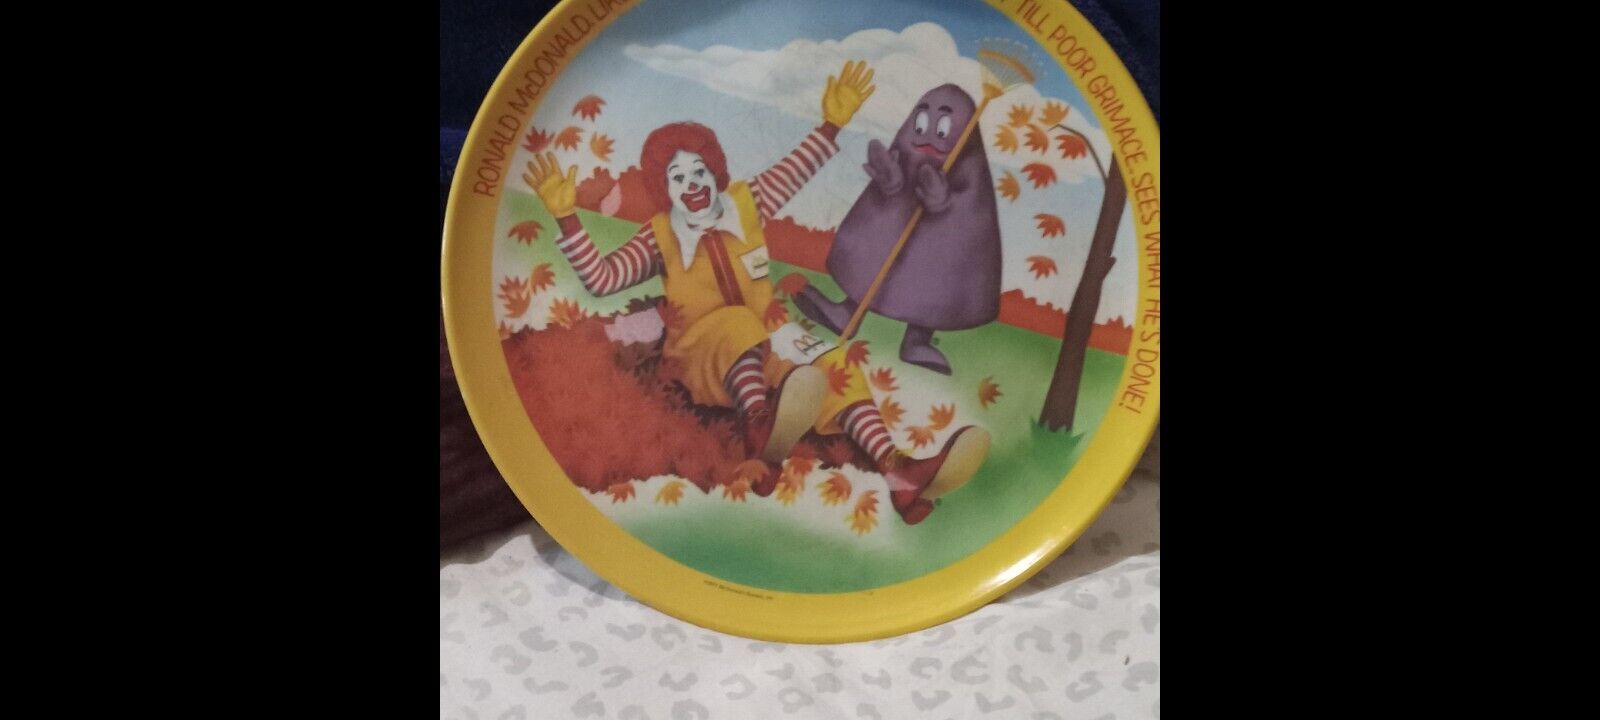 1977 Vintage Seasons Ronald McDonald's 37 Plates by Lexington Made USA Fall 